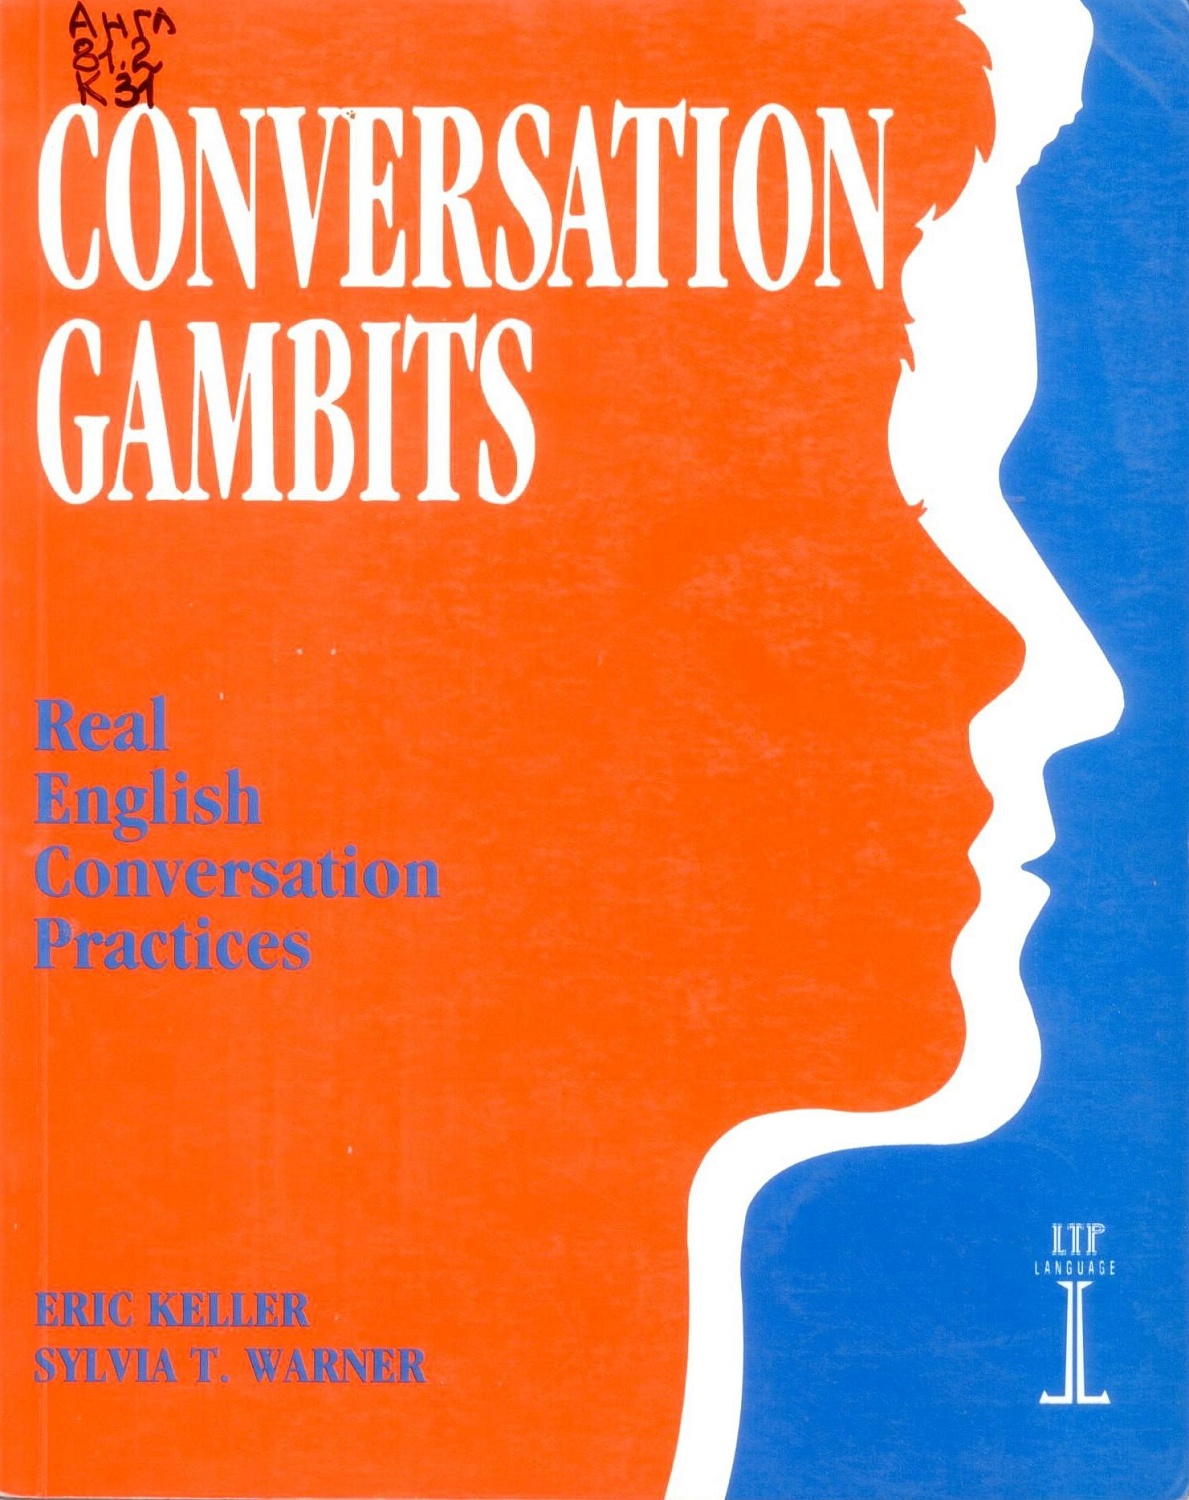 Англ 81.2 K 31 Conversation gambits: Real English Conversation Practices / Eric Keller and Sylvia T. Warner. – Hove: Language Teaching Publications, 1988. – 96 p.: ill.  Пер. загл.: Разговорные клише в английском языке.